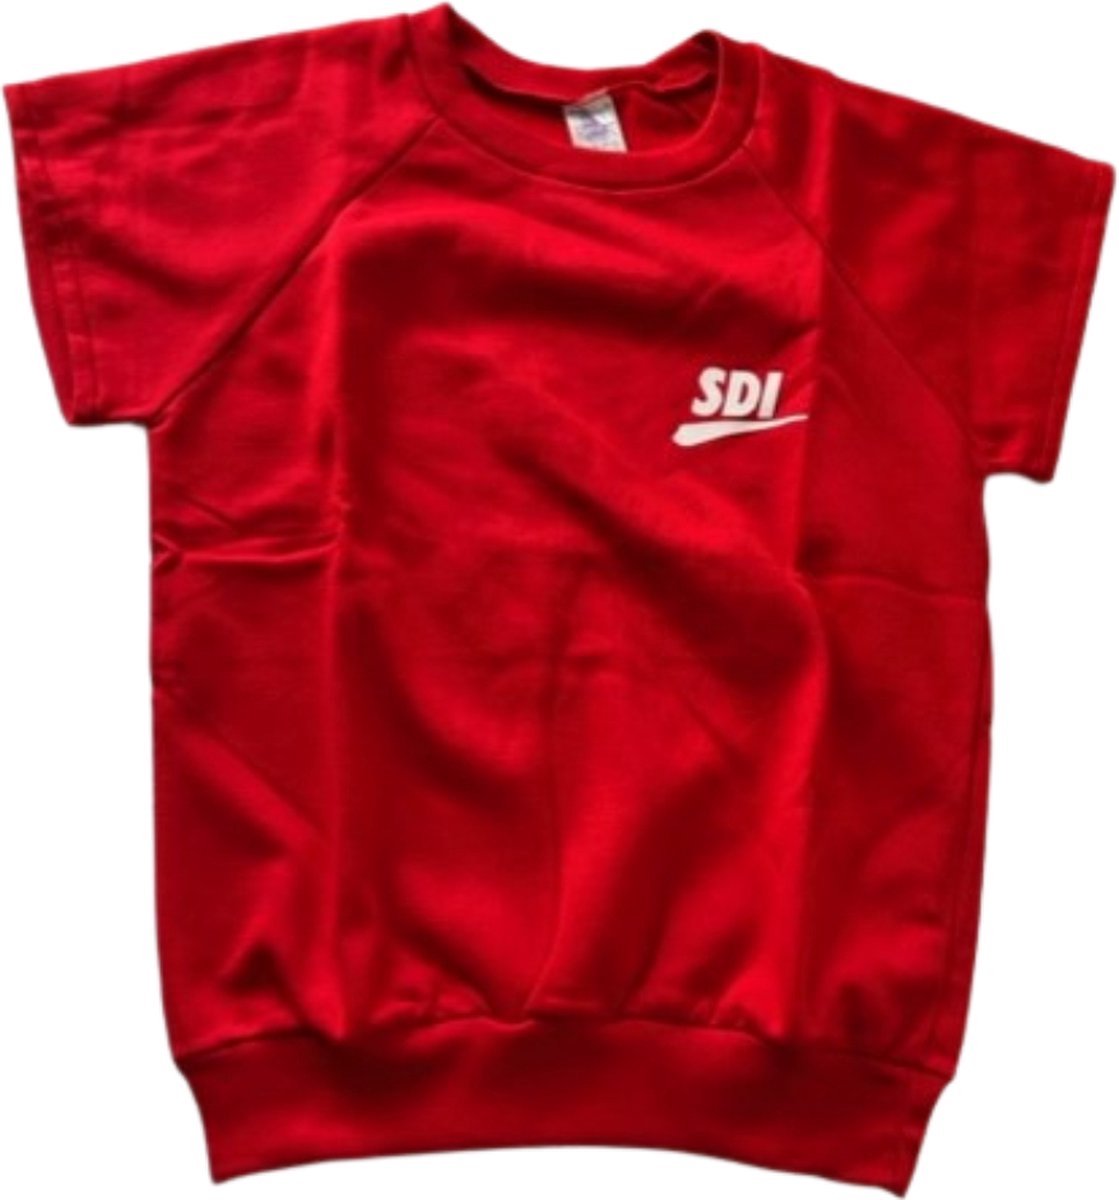 SDI - opwarm t-shirt - boksen - maat S - rood